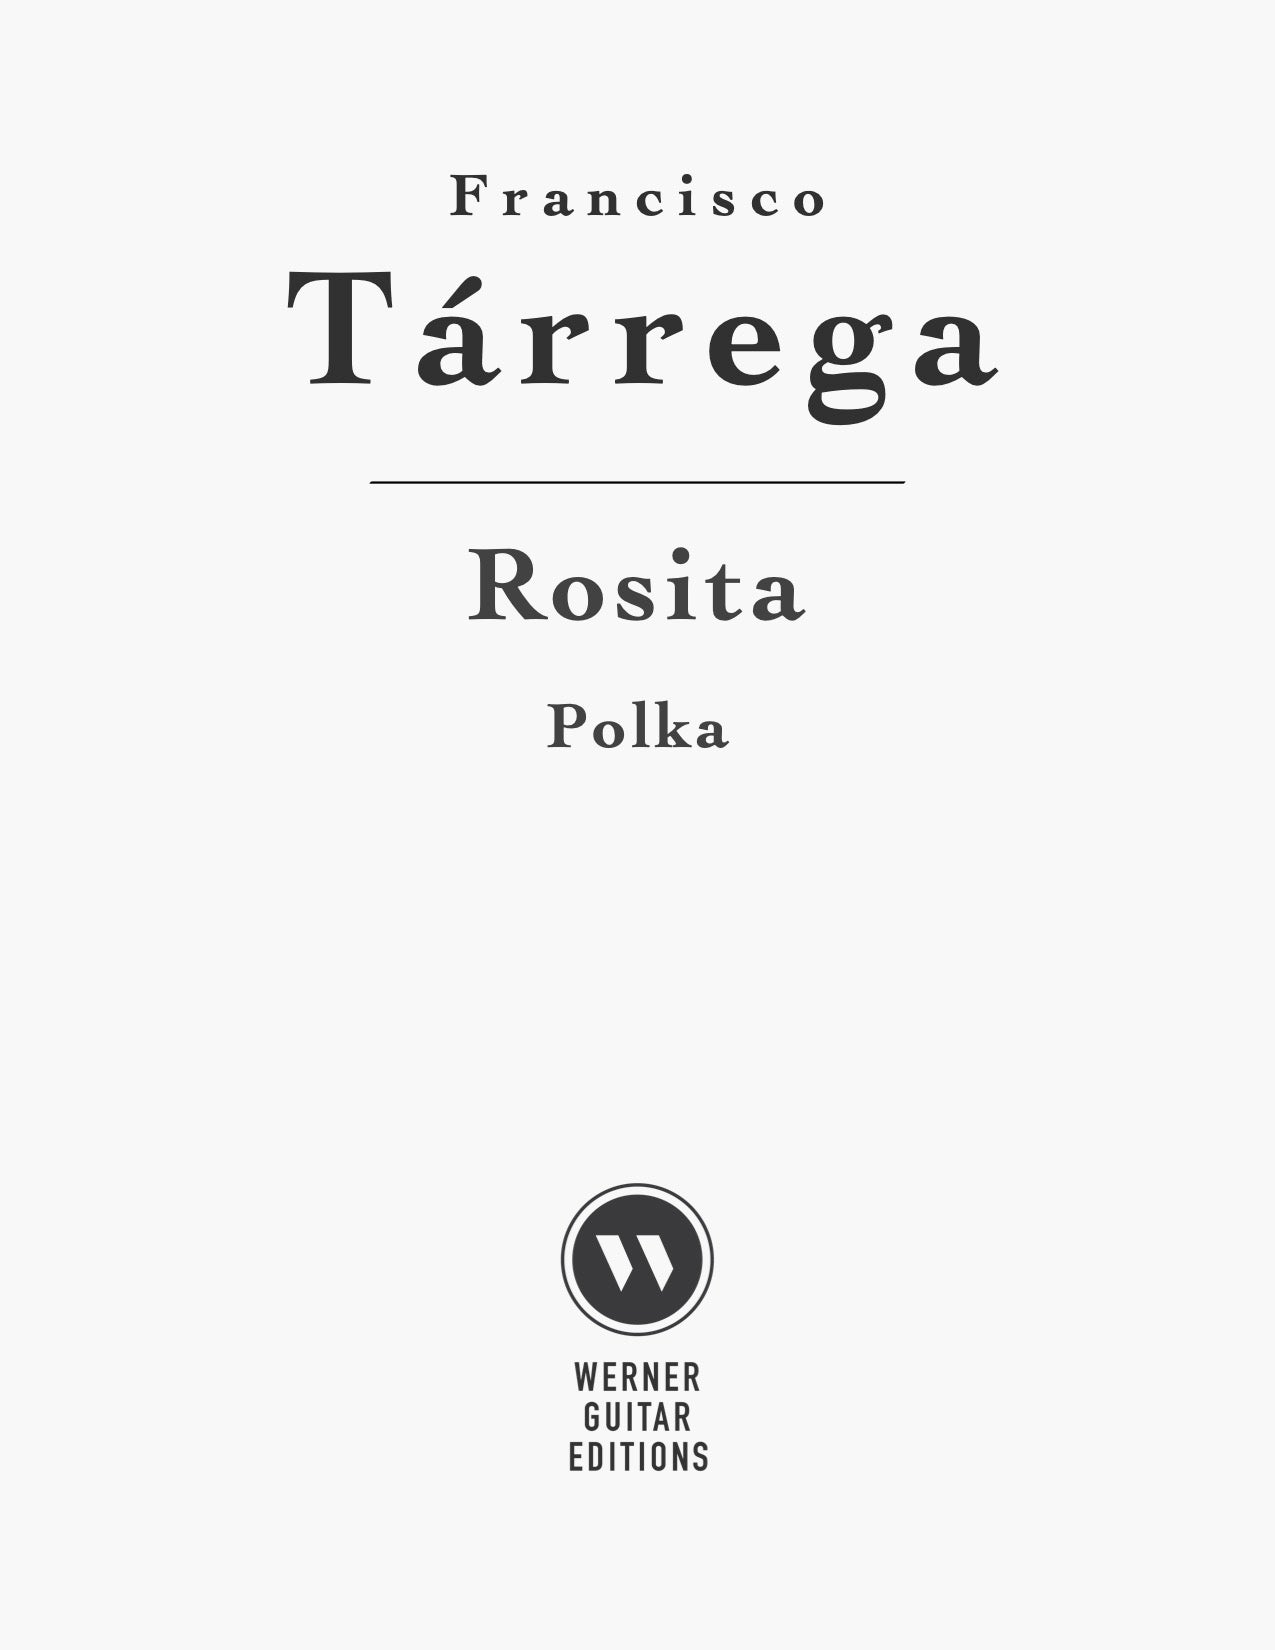 Rosita (Polka) by Francisco Tárrega - PDF Sheet Music